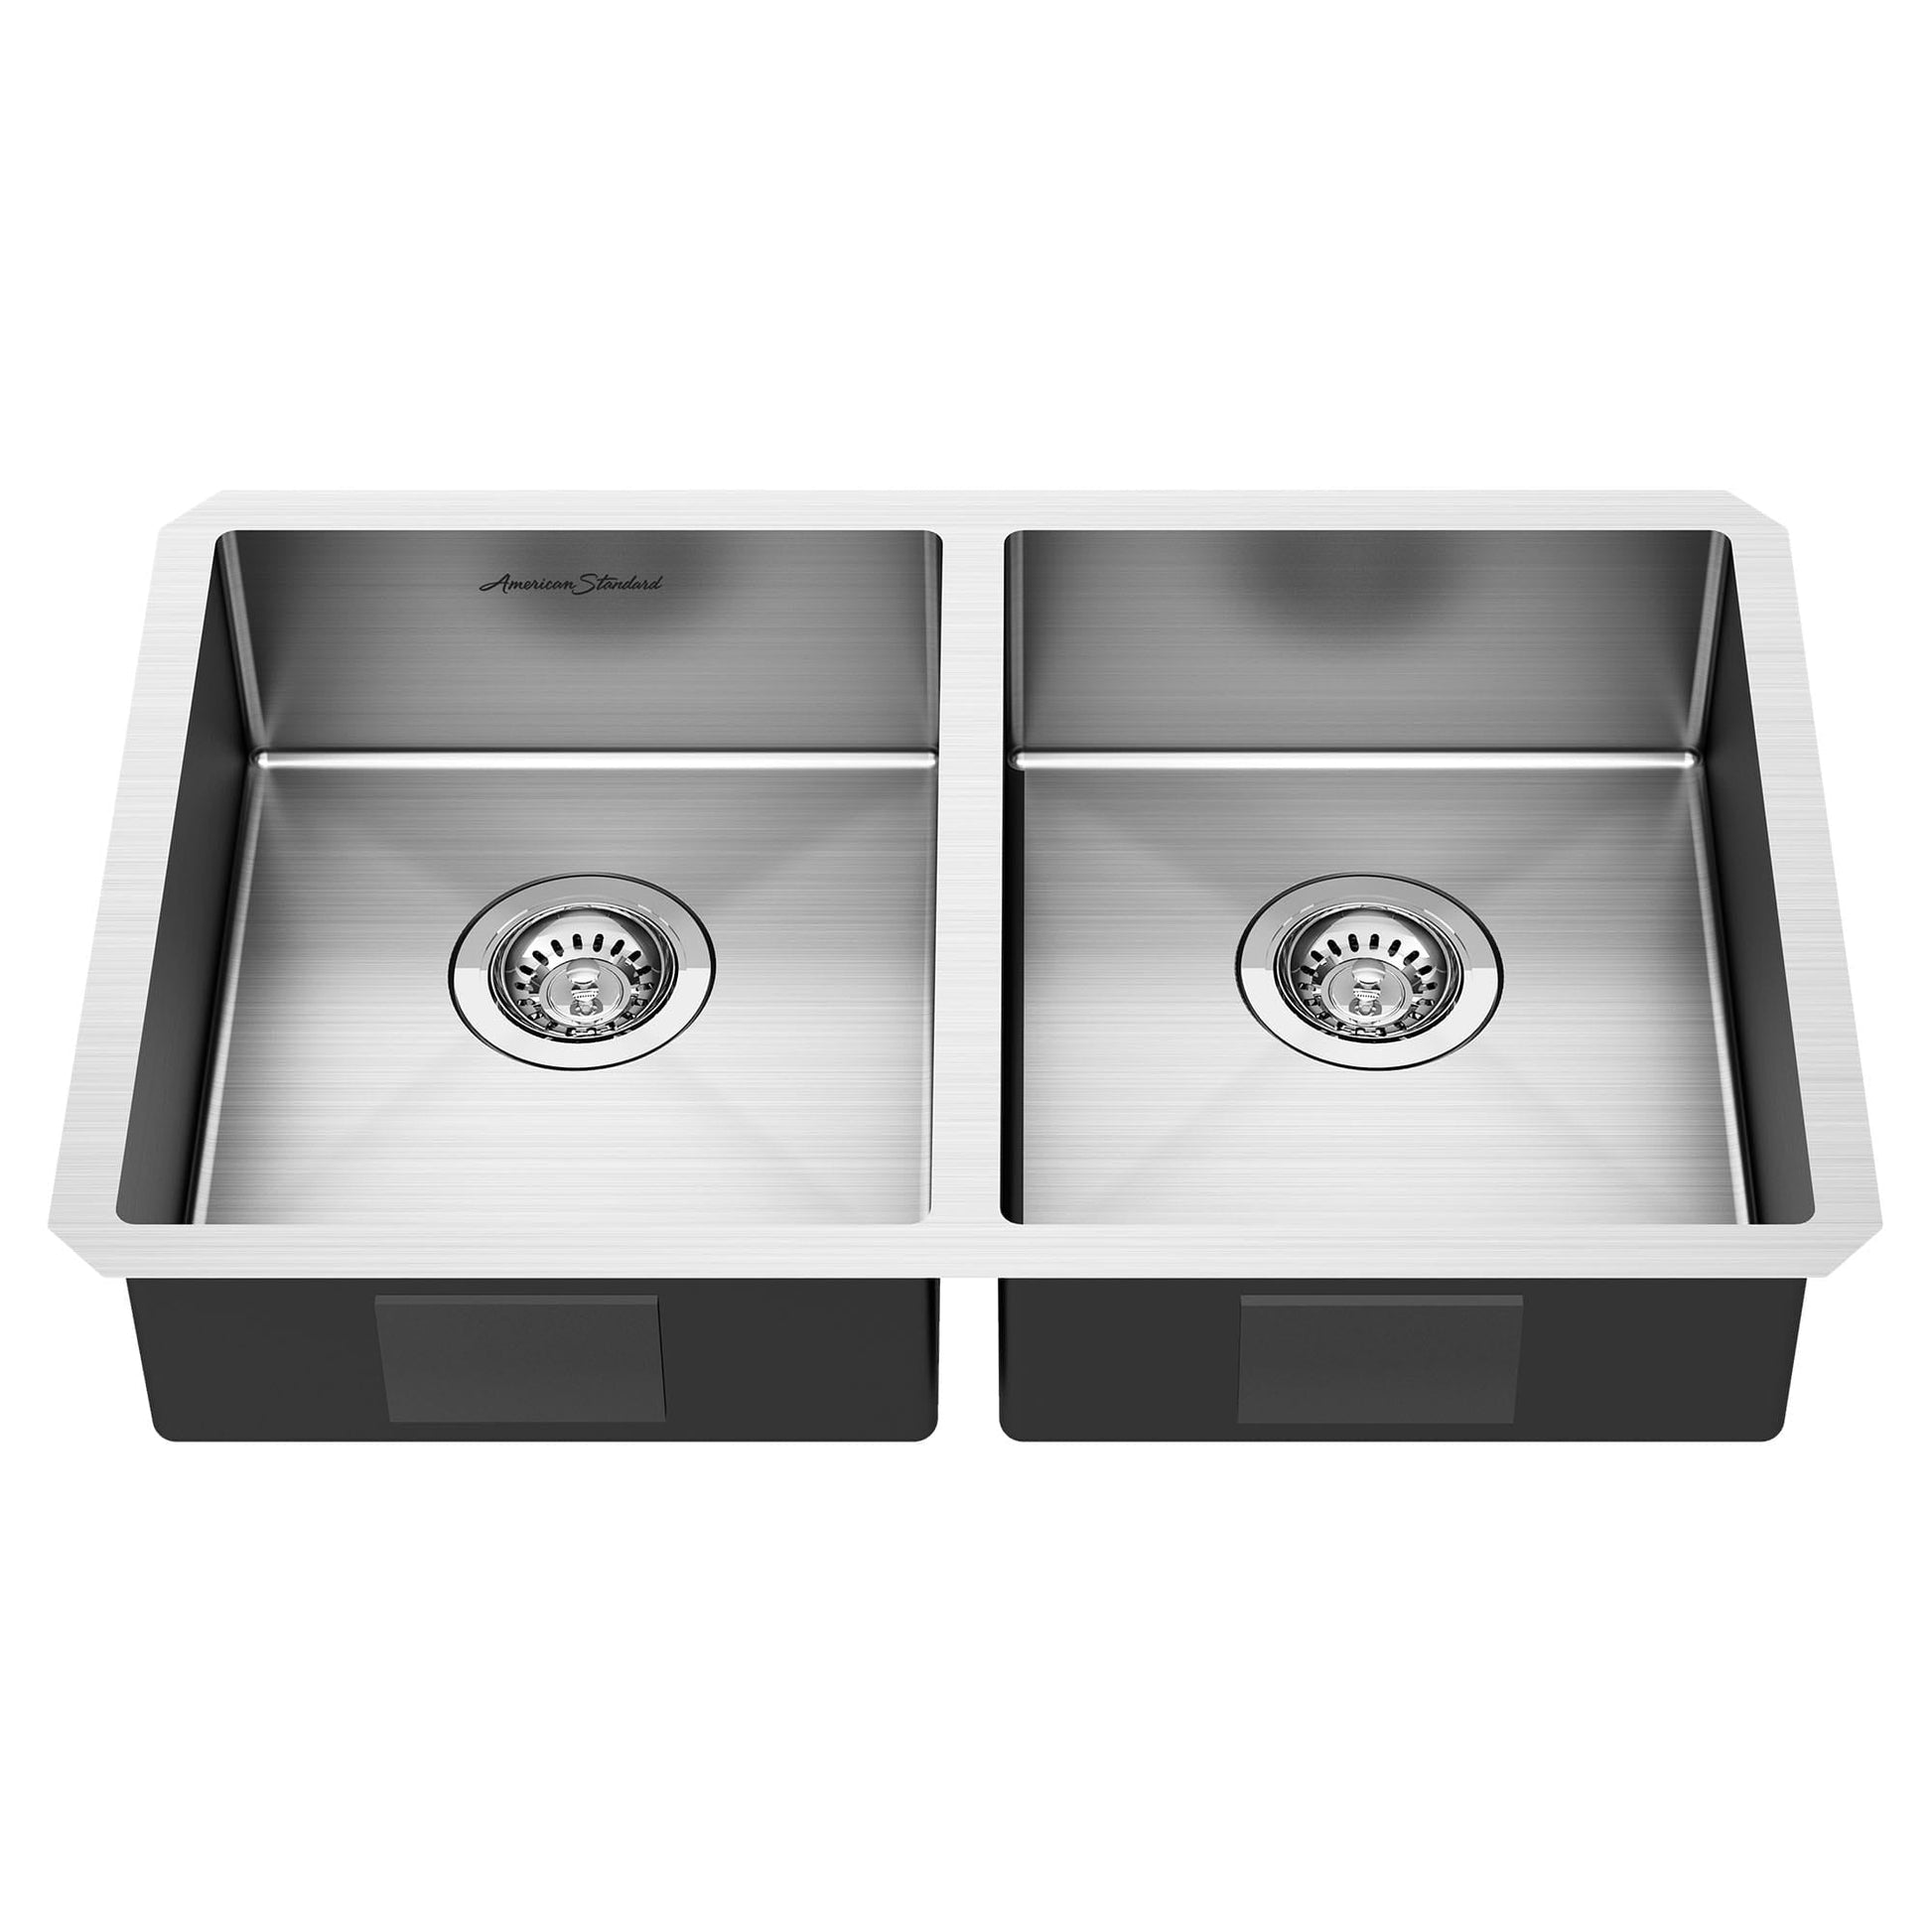 American Standard Pekoe® 29 x 18-Inch Stainless Steel Undermount Double-Bowl ADA Kitchen Sink - 18DB6291800